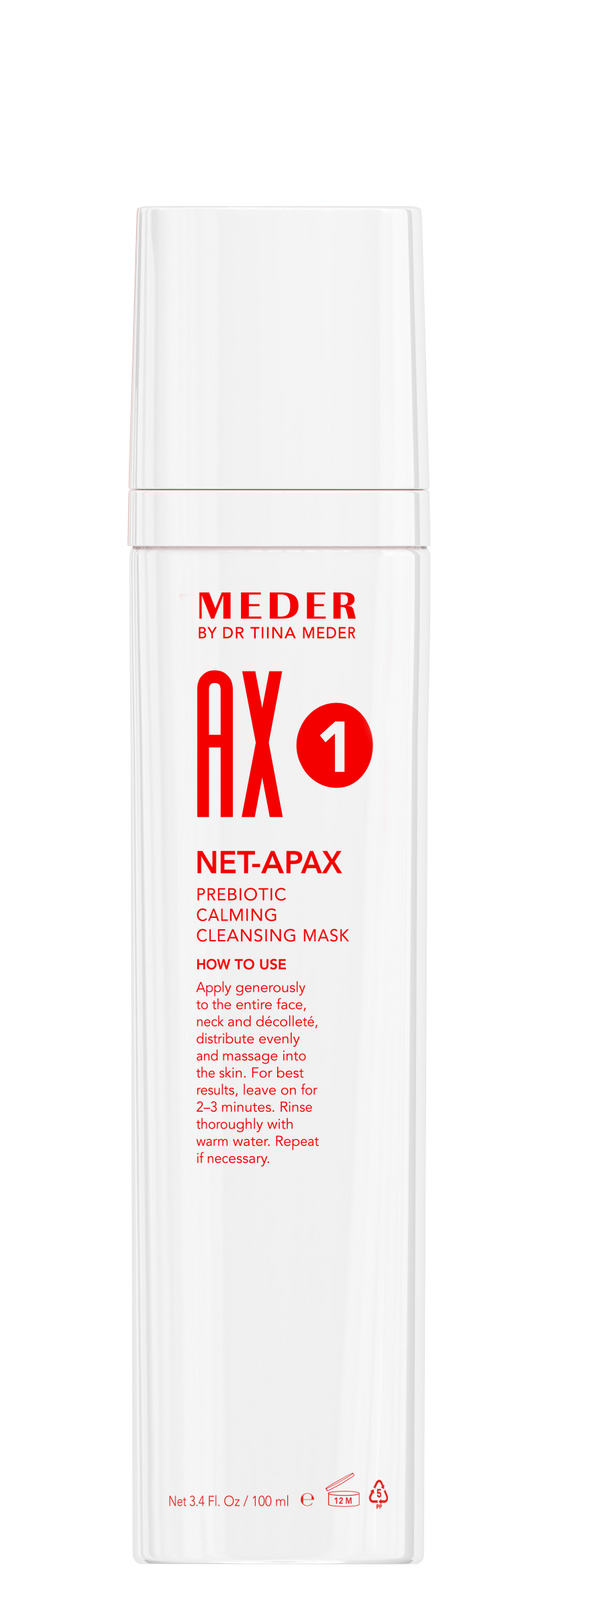 Net-Apax Prebiotic Cleansing Mask